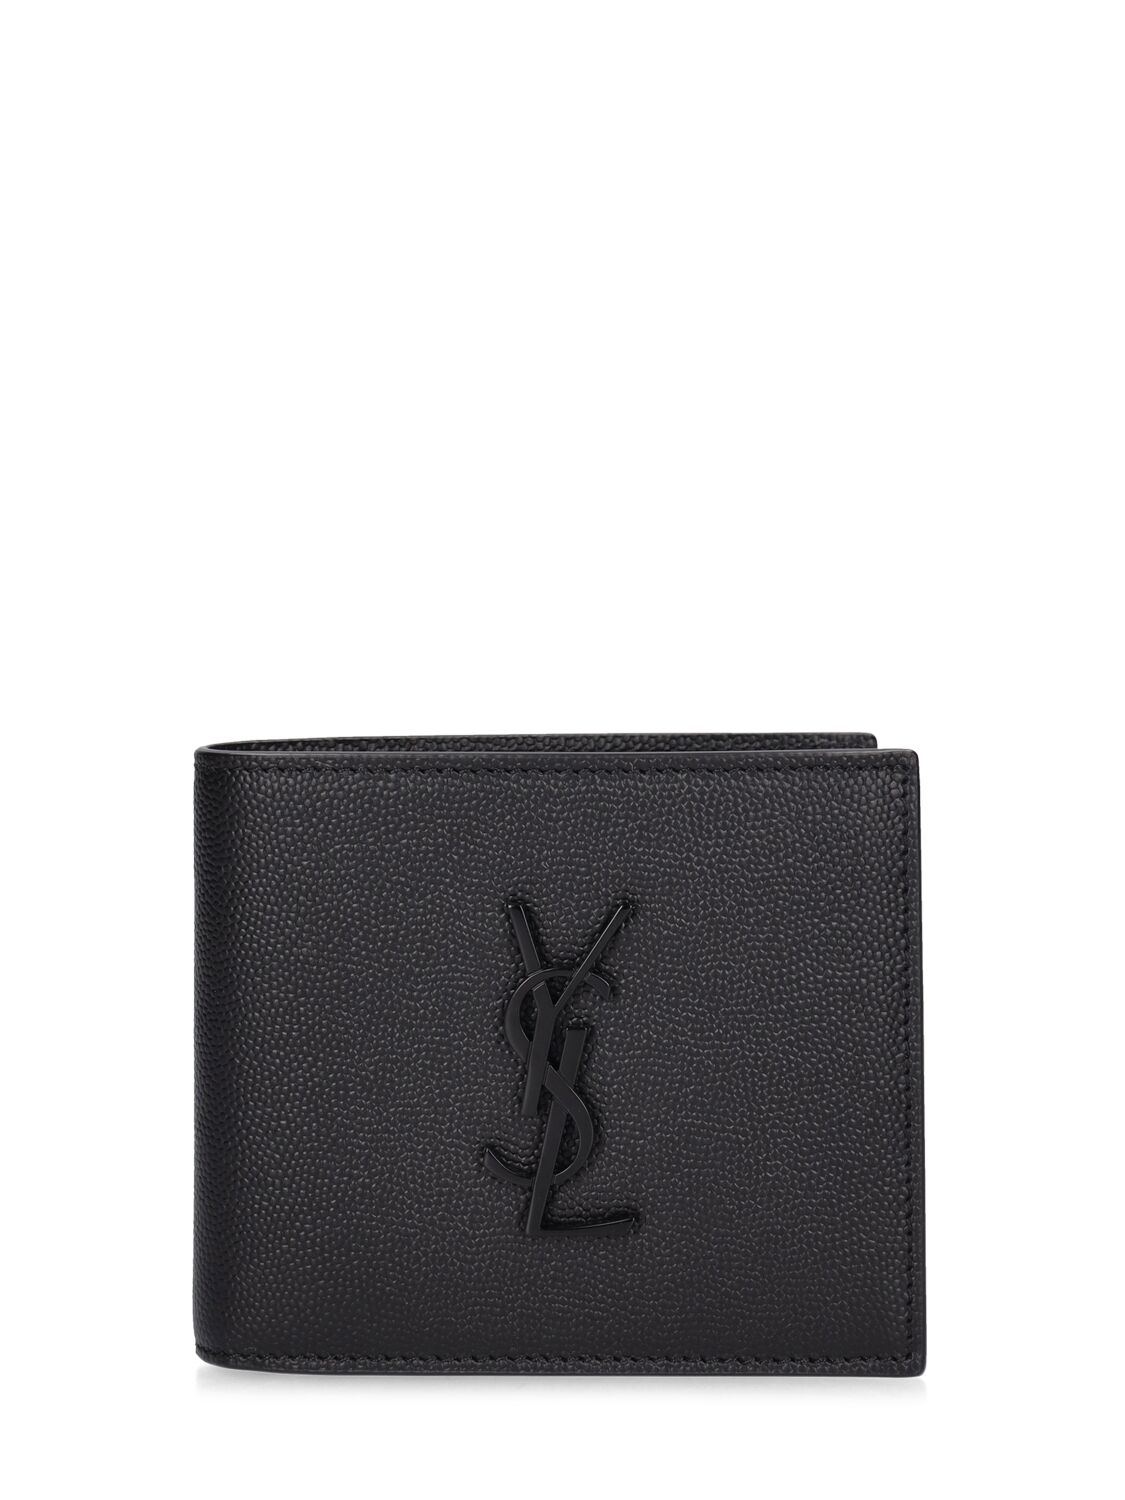 Image of Cassandre East/west Leather Wallet